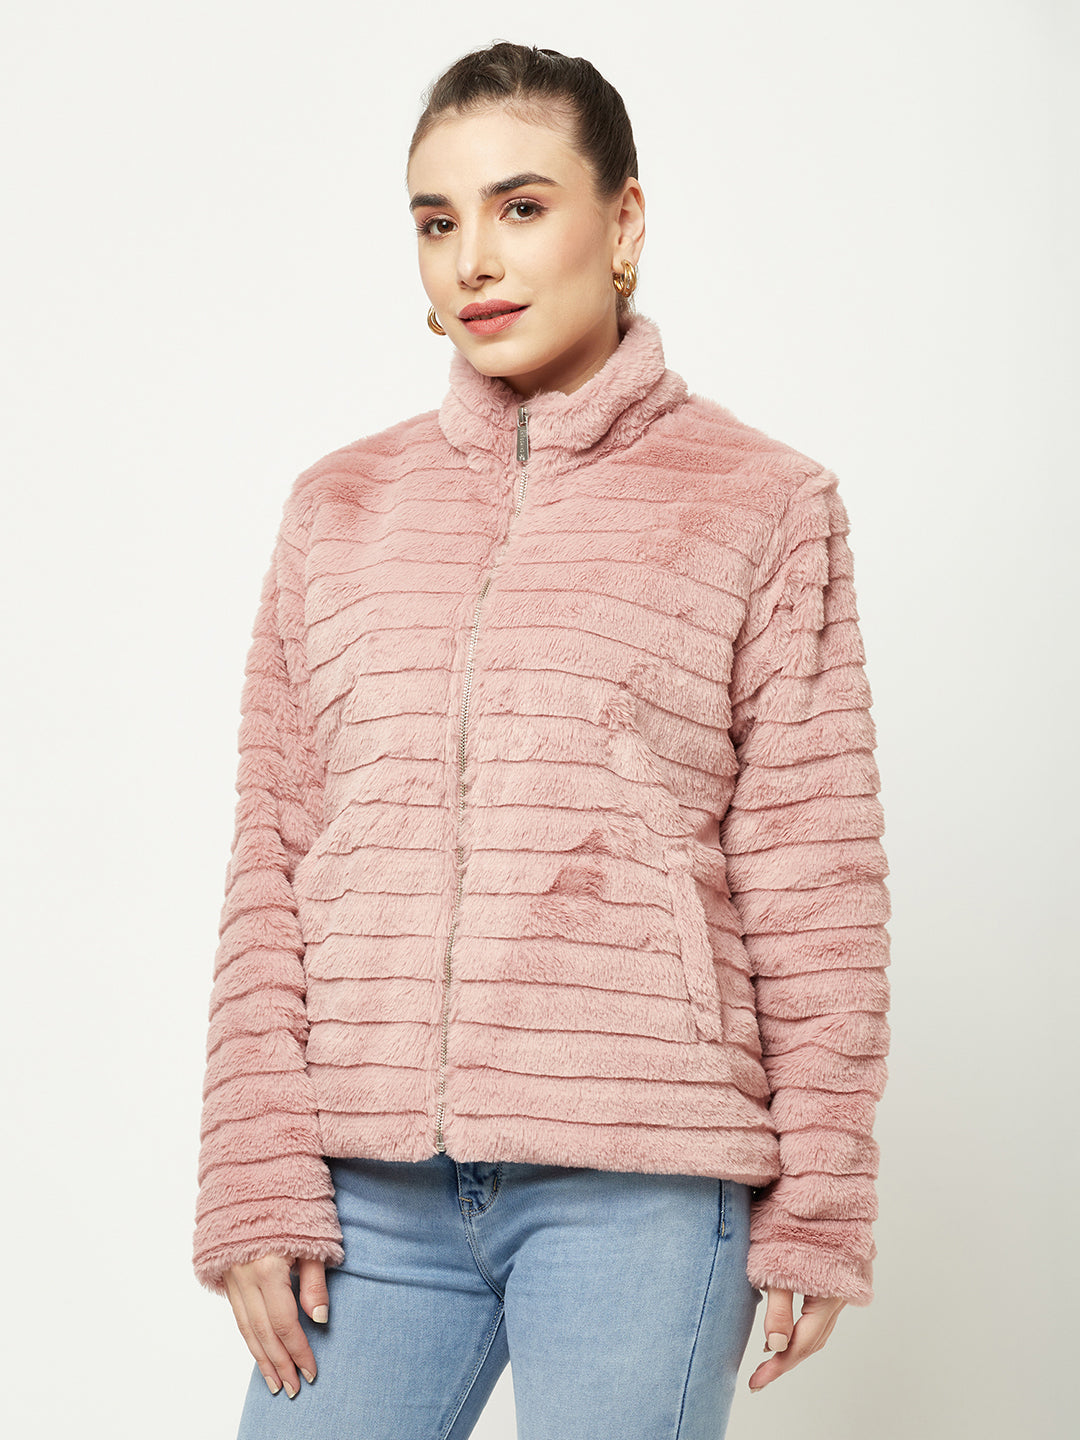   Pink Faux Fur Jacket